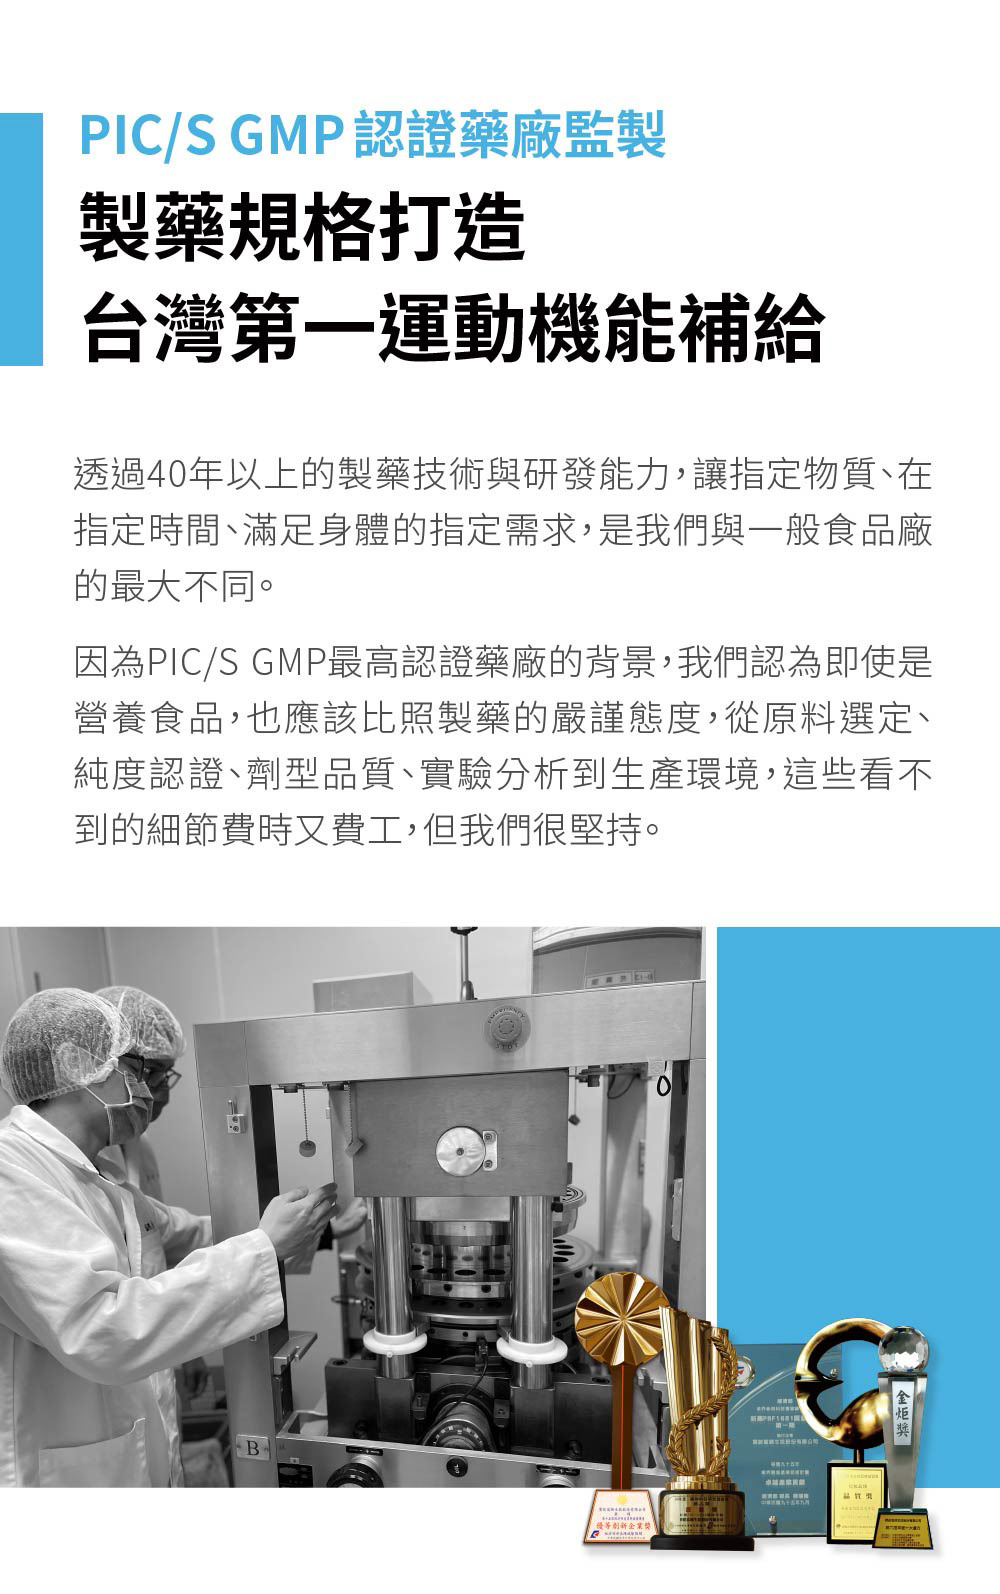 race on 認證藥廠監製，台灣生產致力於最高品質